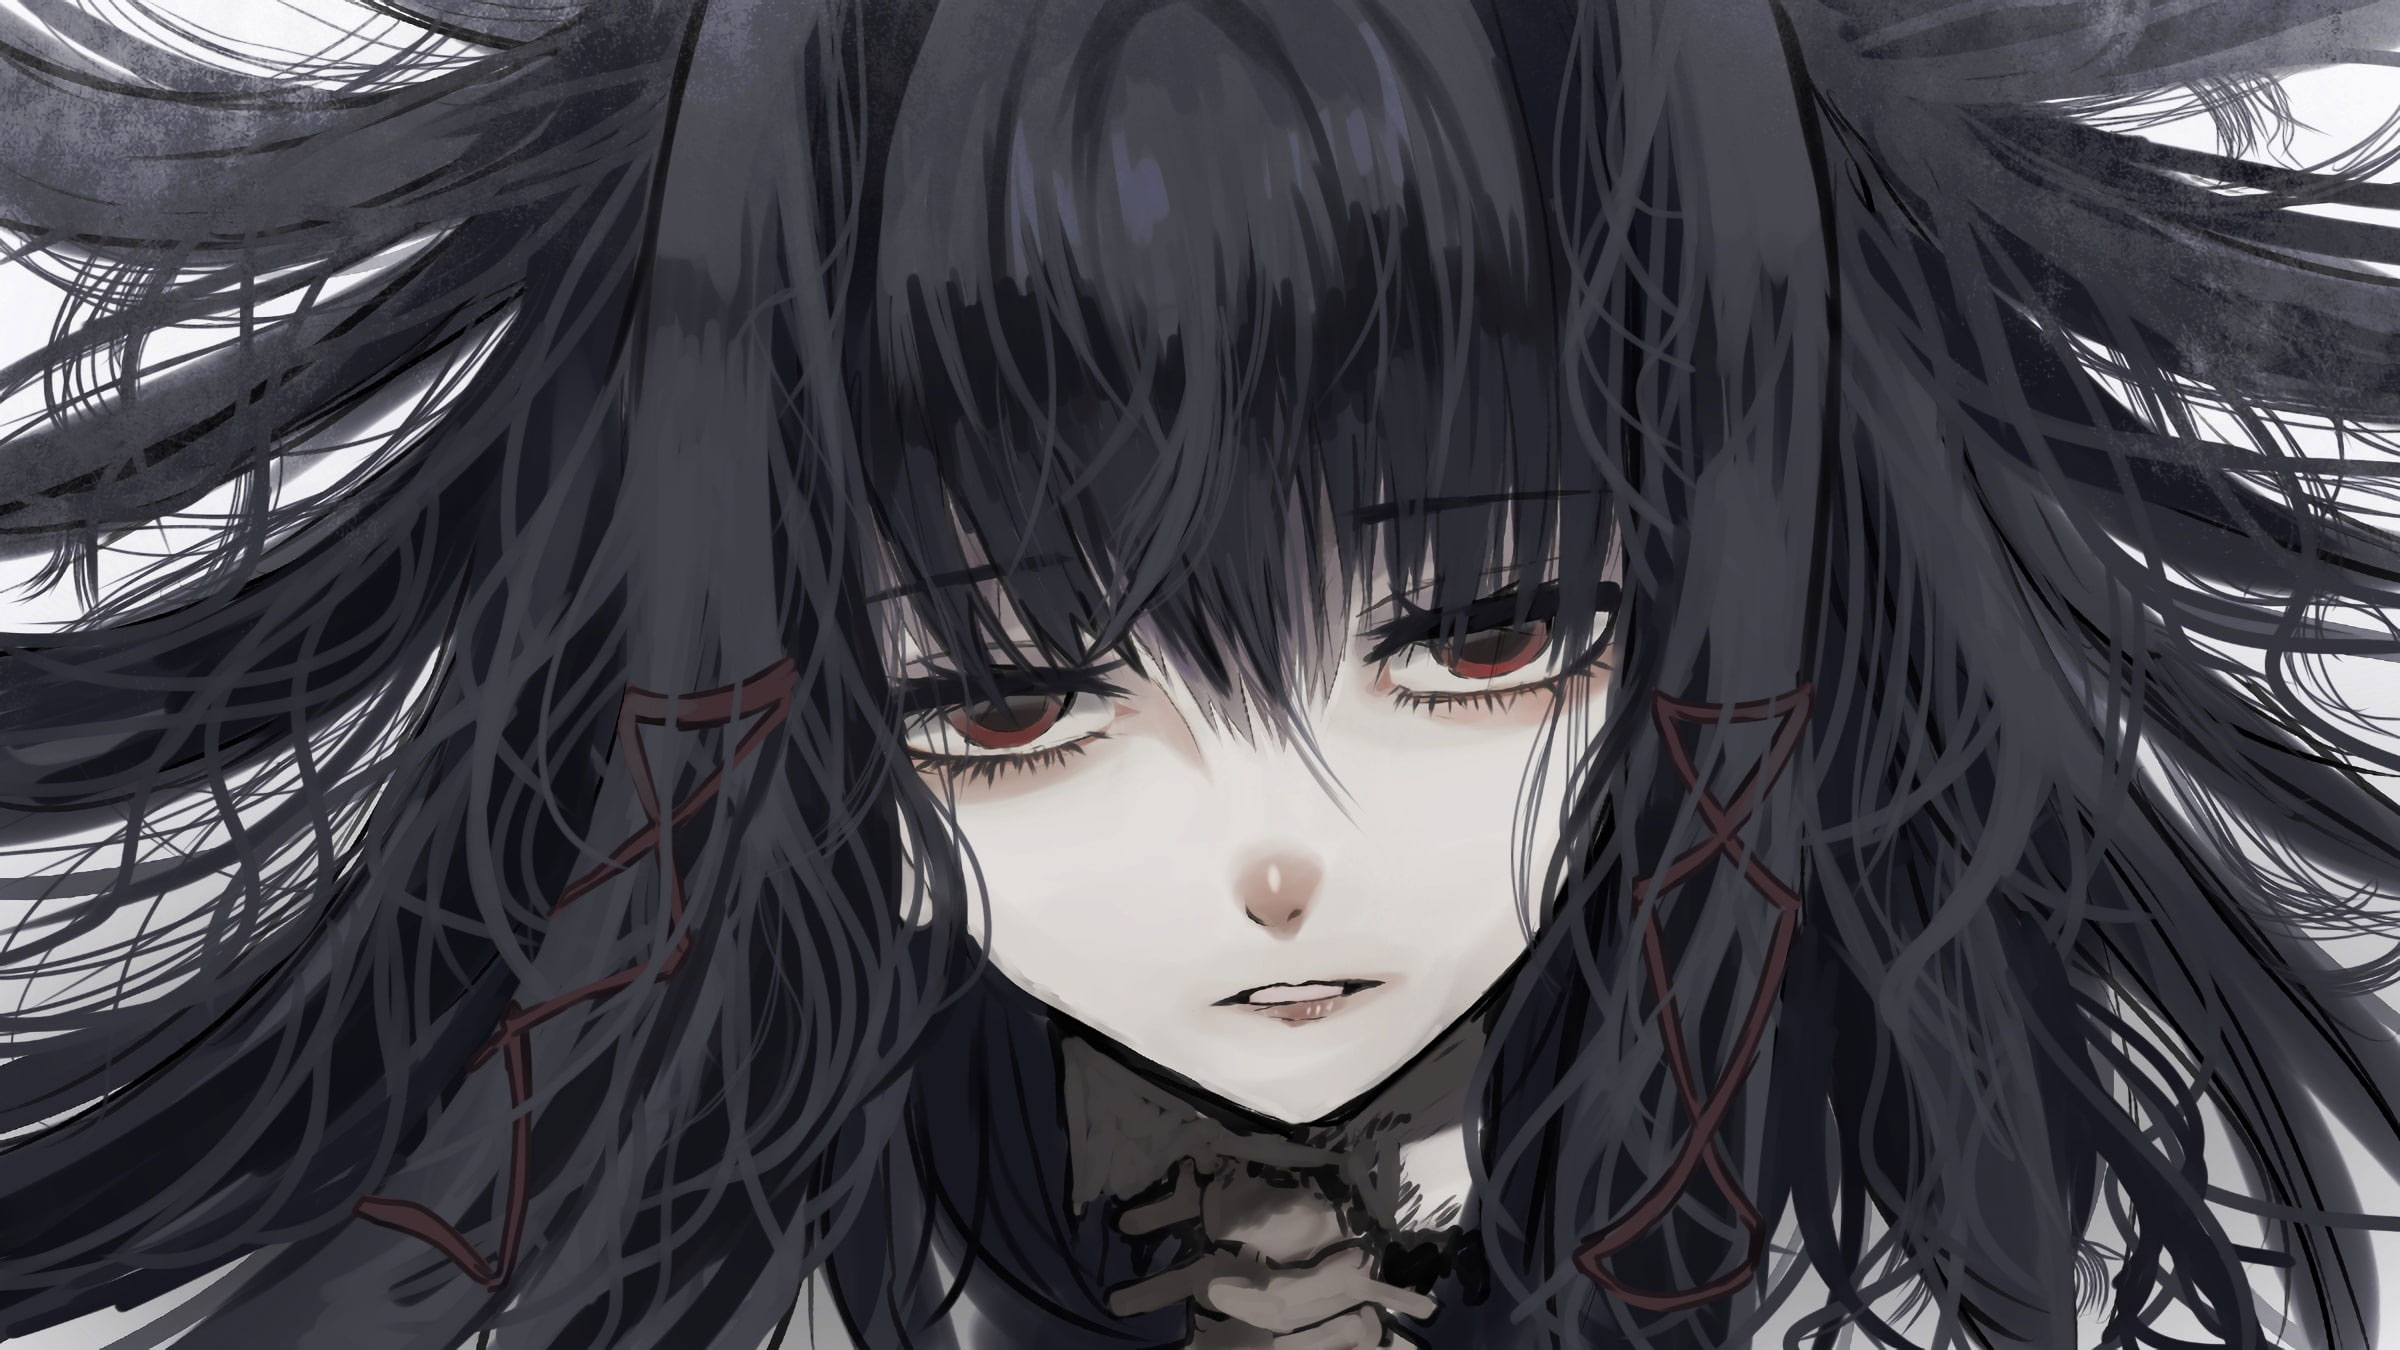 Wallpaper Anime Girl, Gothic, Close Up, Depressed, Black - Wallpaperforu